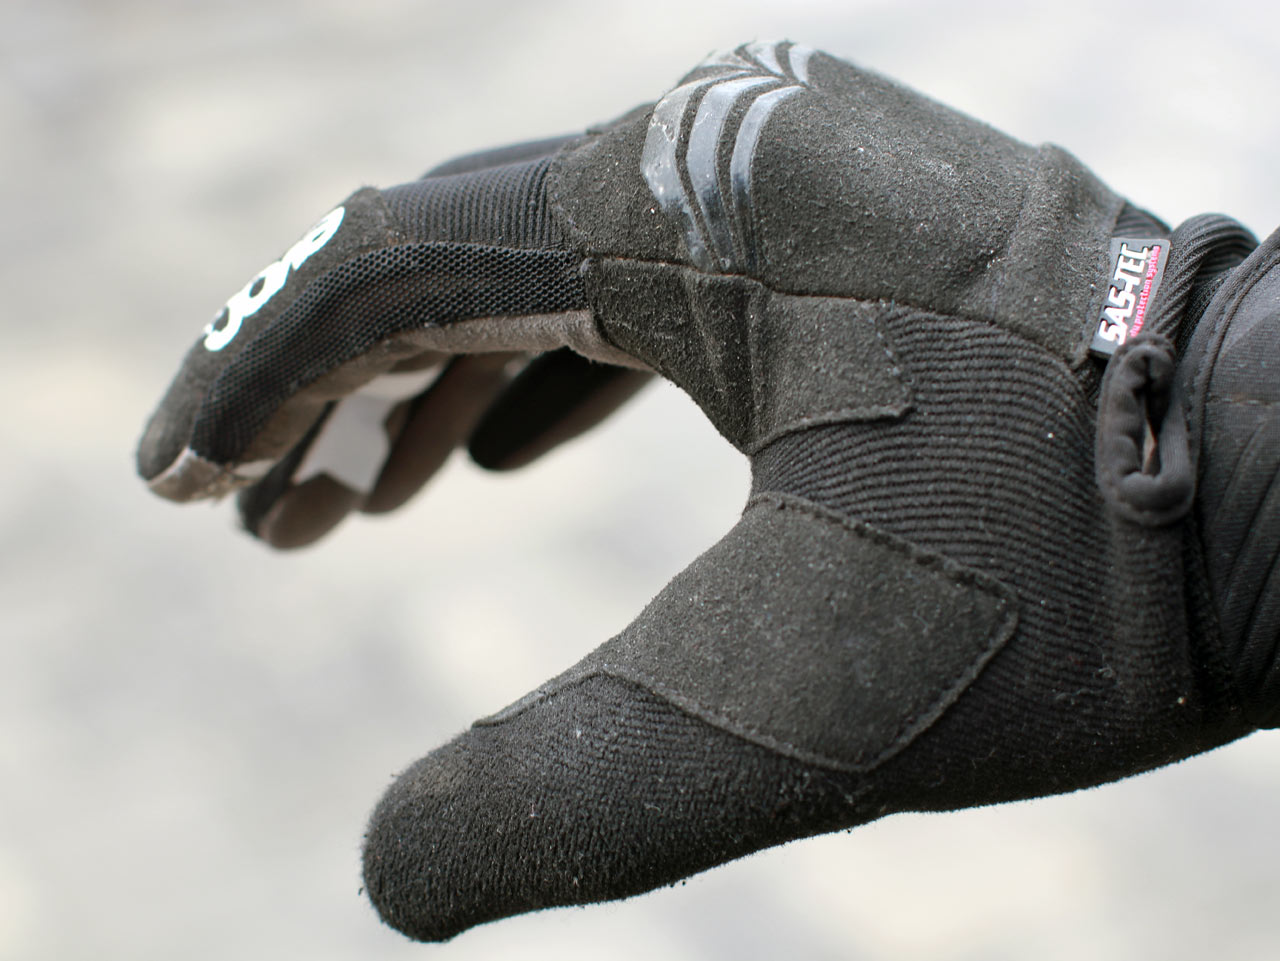 Evoc Freeride Touch Glove